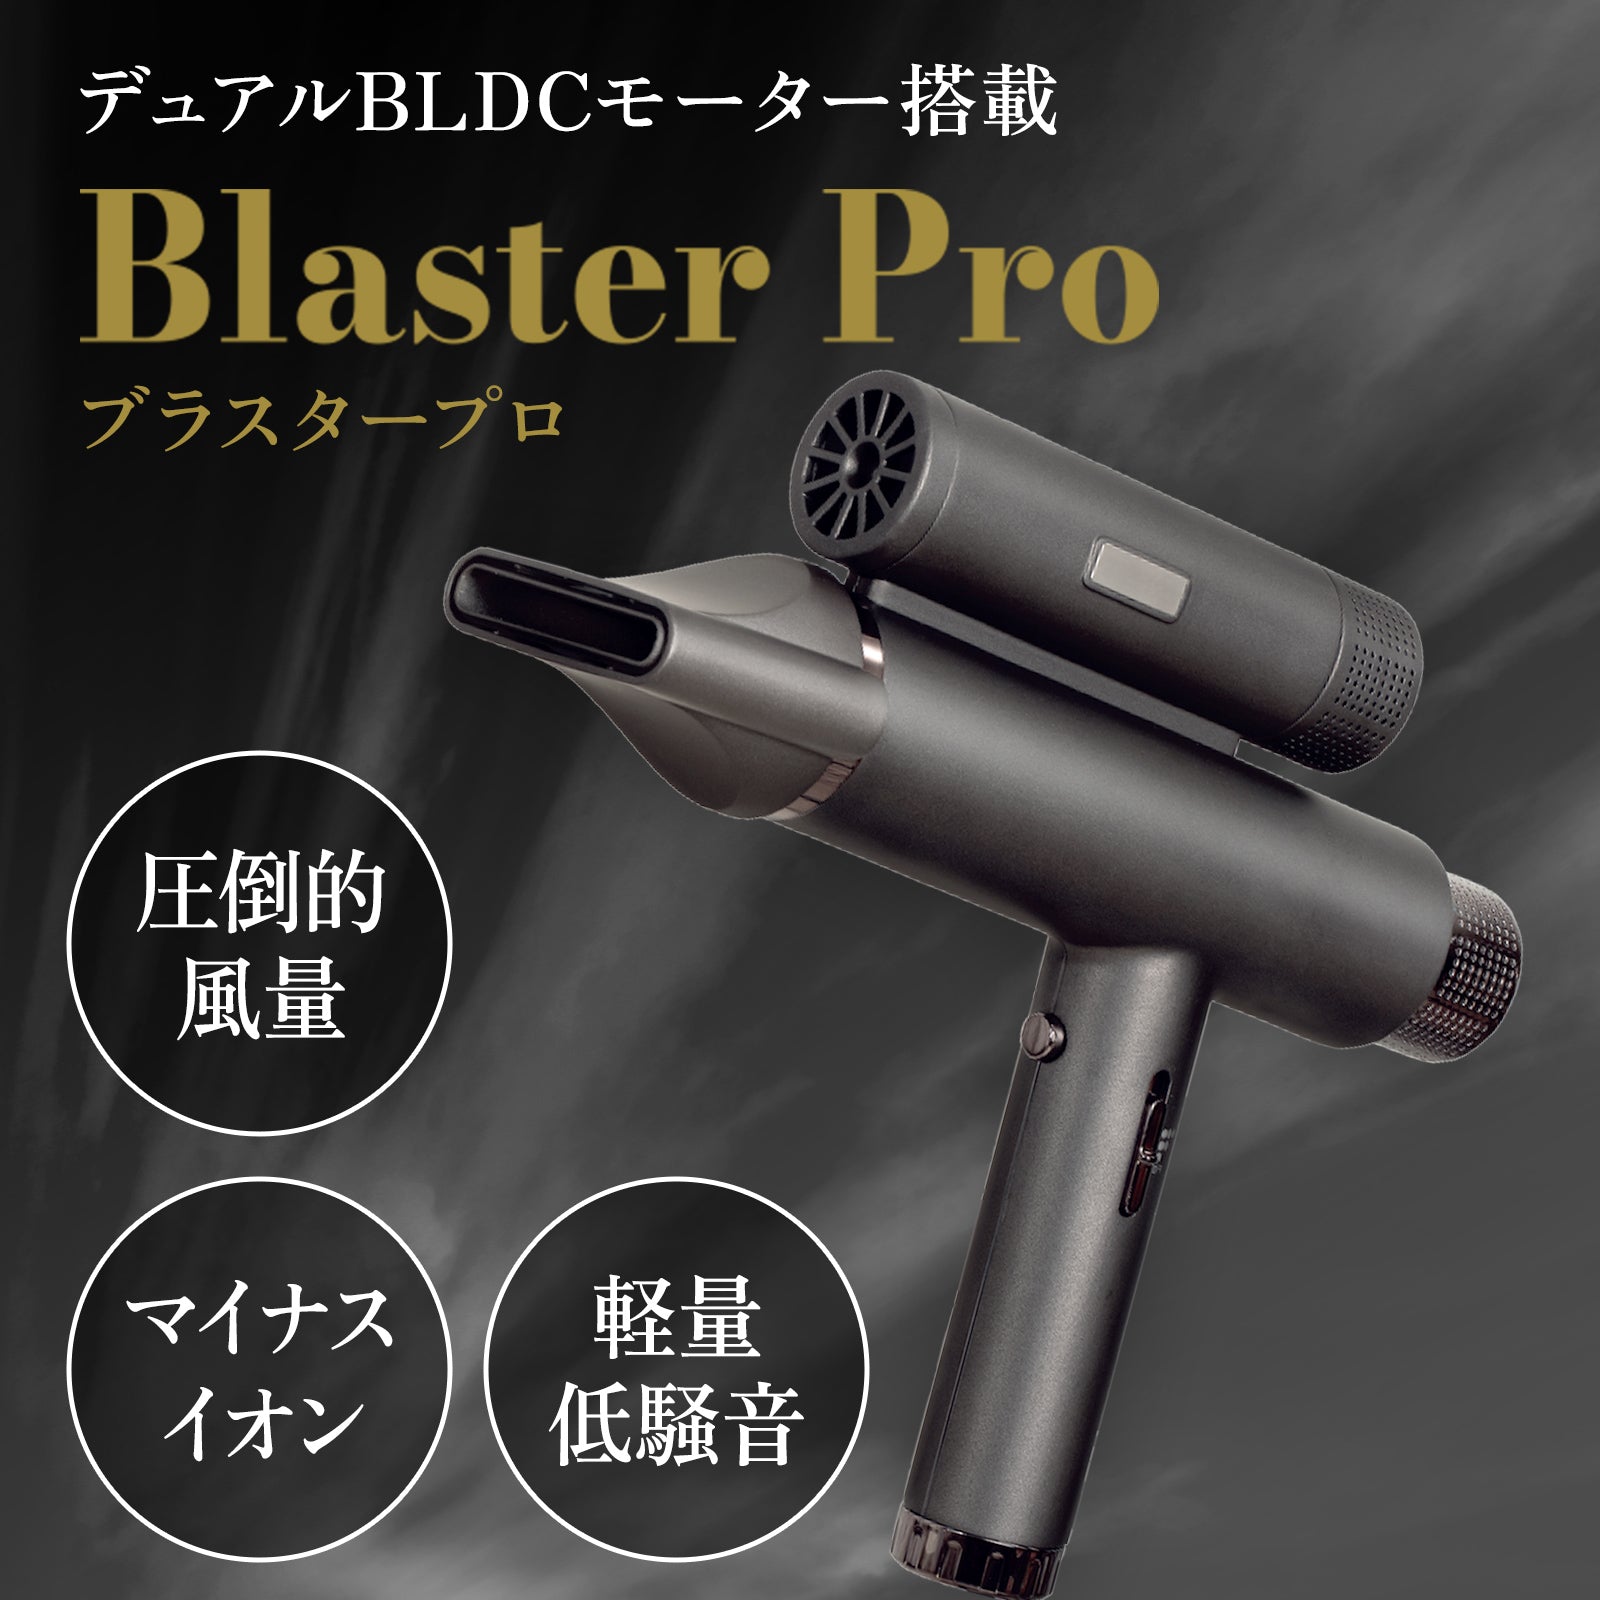 Blaster Pro ドライヤー ブラスタープロ-